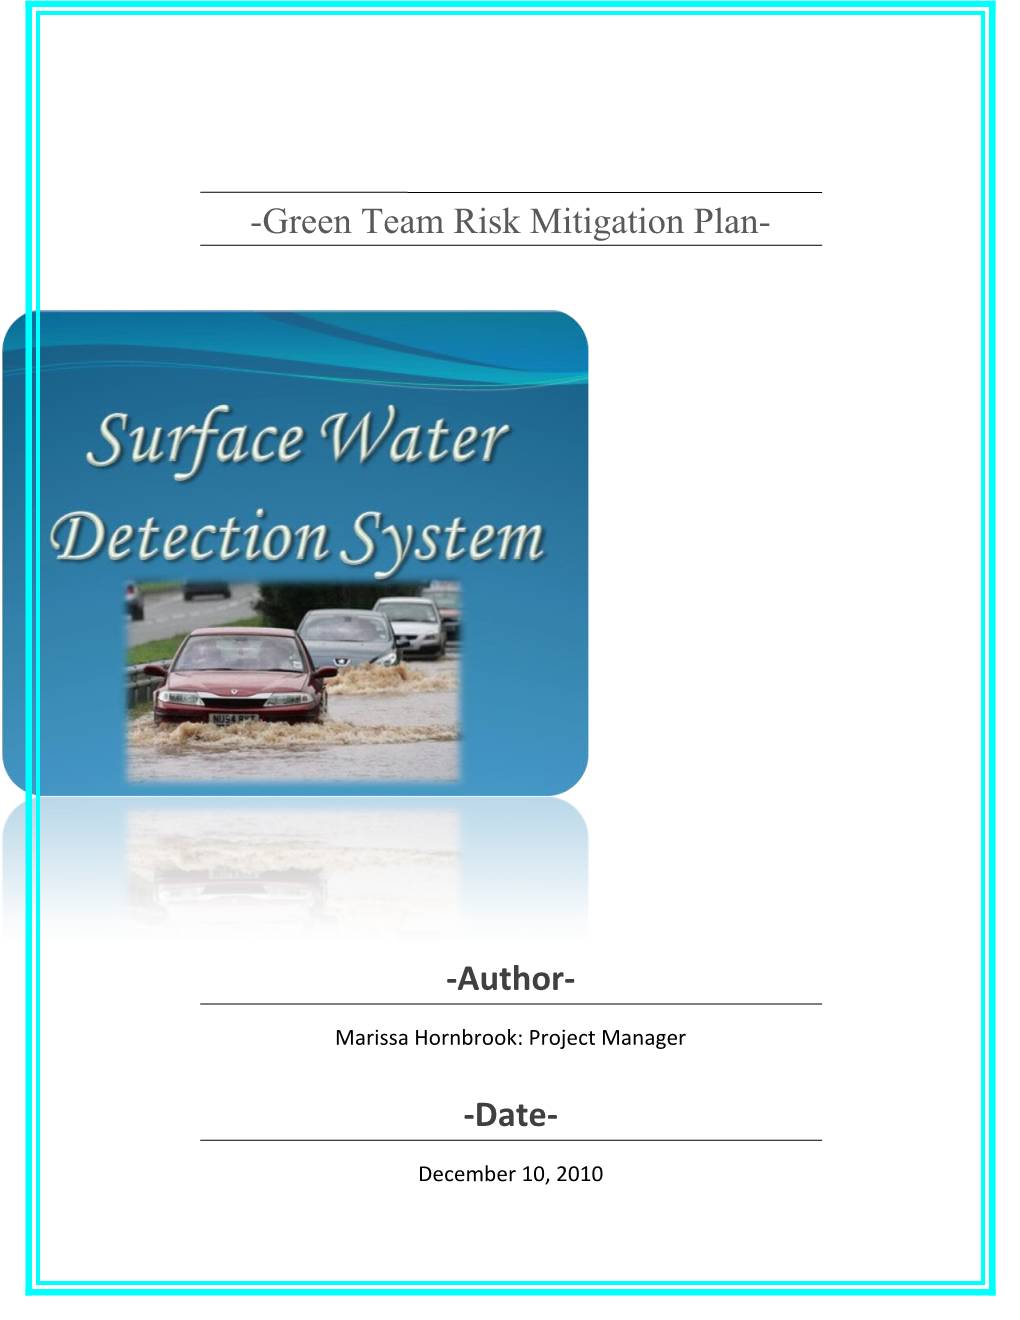 SWDS - Green Team Risk Mitigation Plan12/10/2010